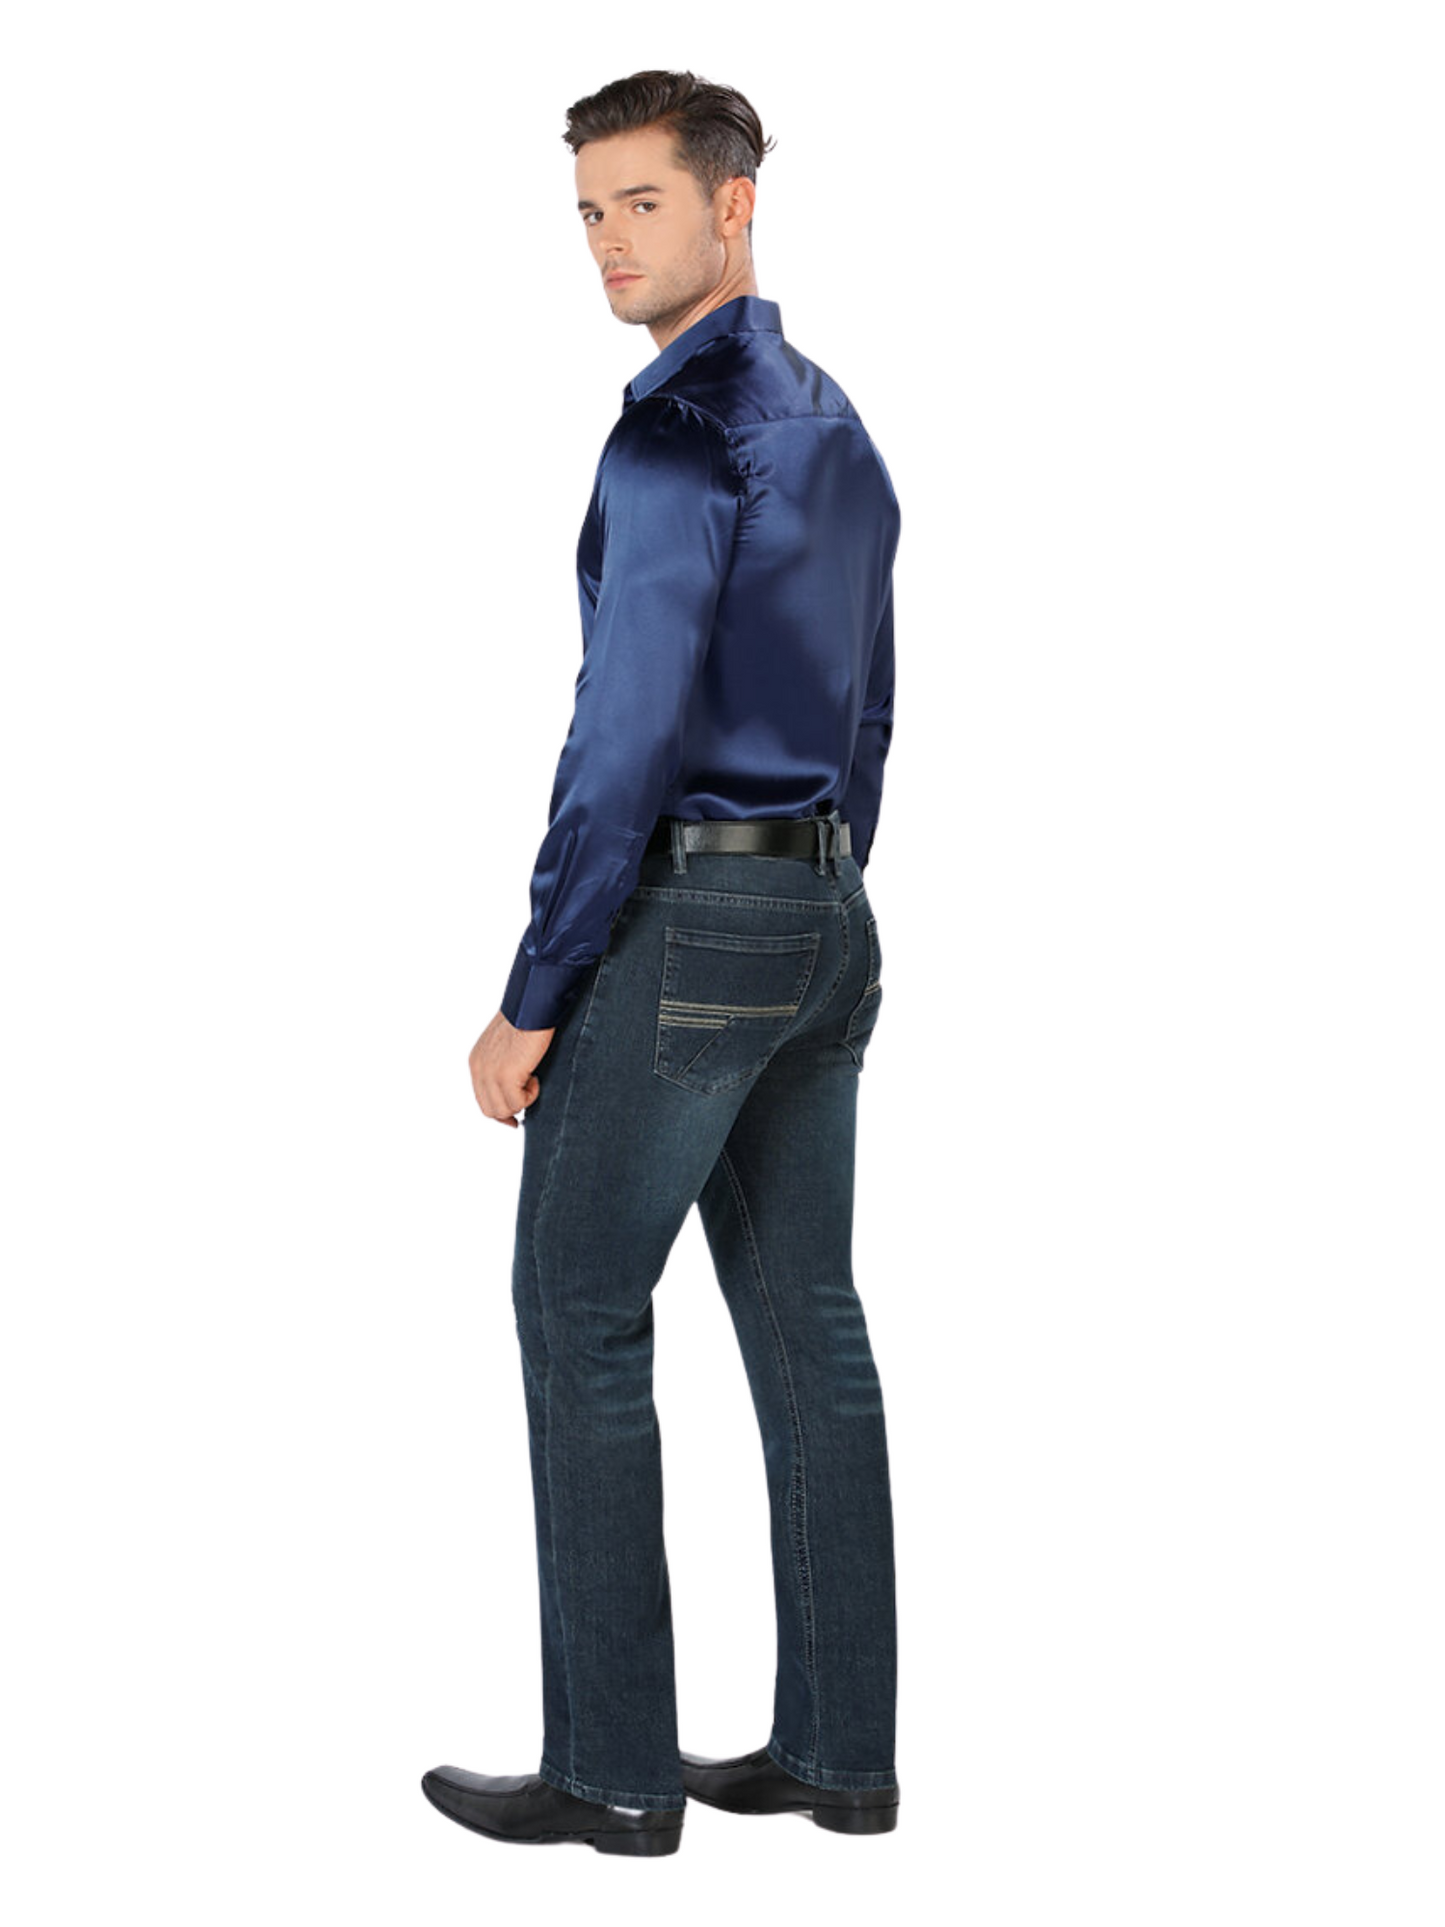 Stretch Denim Jeans for Men 'Montero' - ID: 2306 Denim Jeans Montero